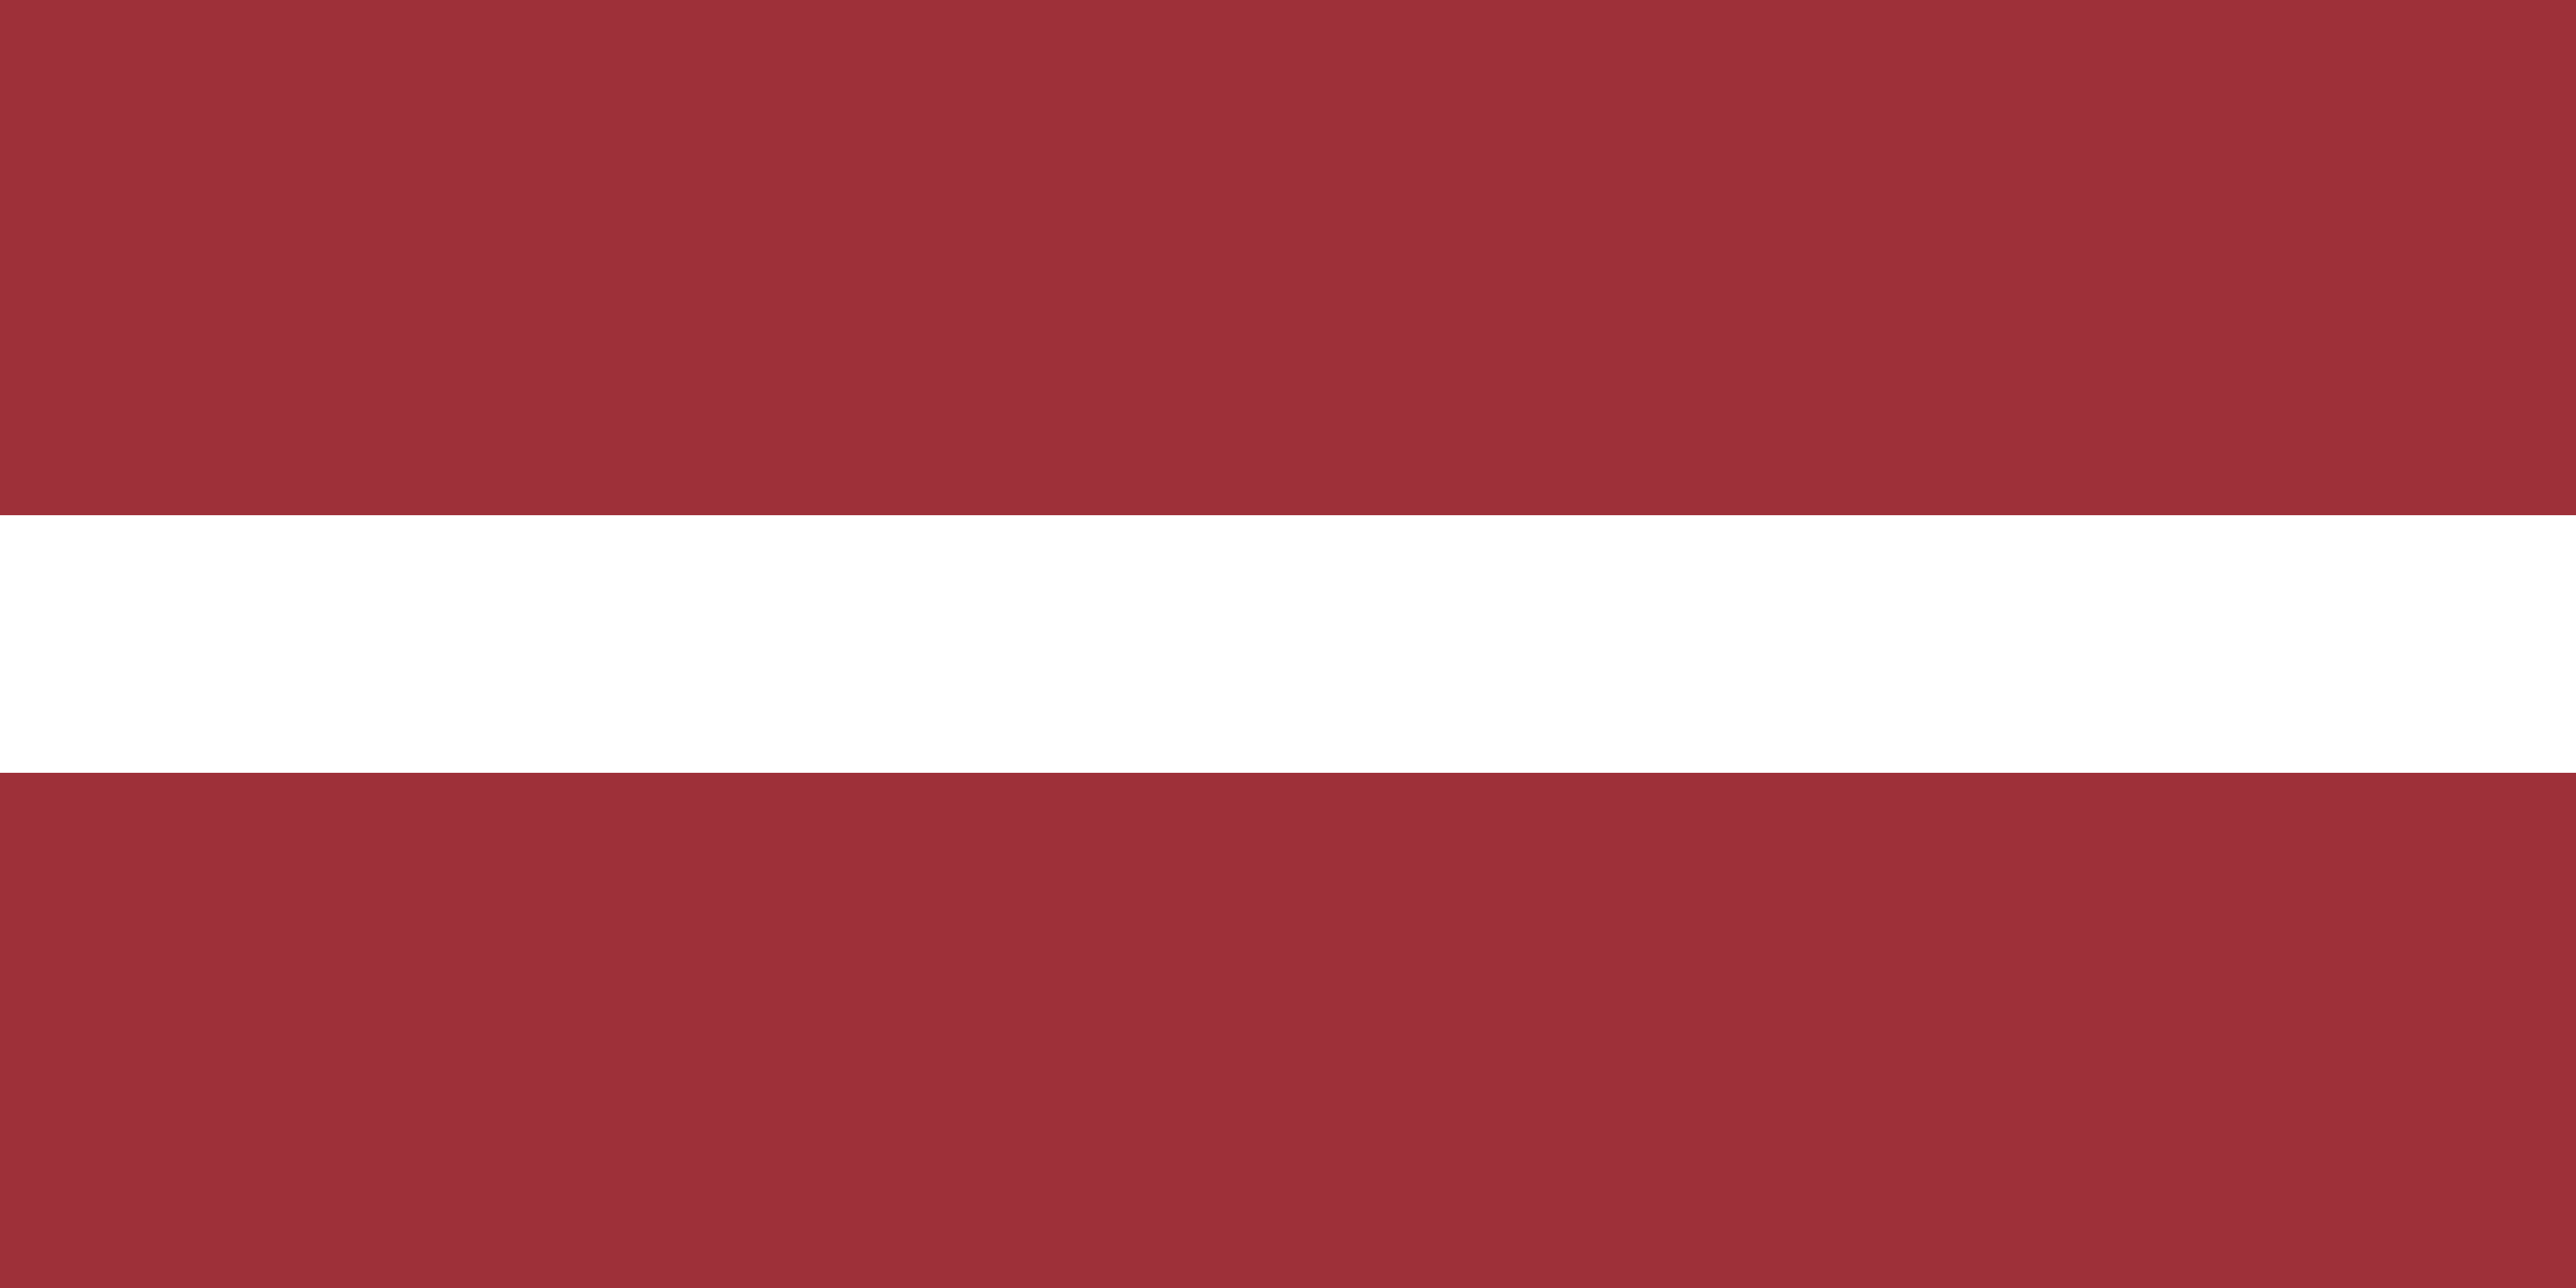 Latvia Flag Vector - Free Download